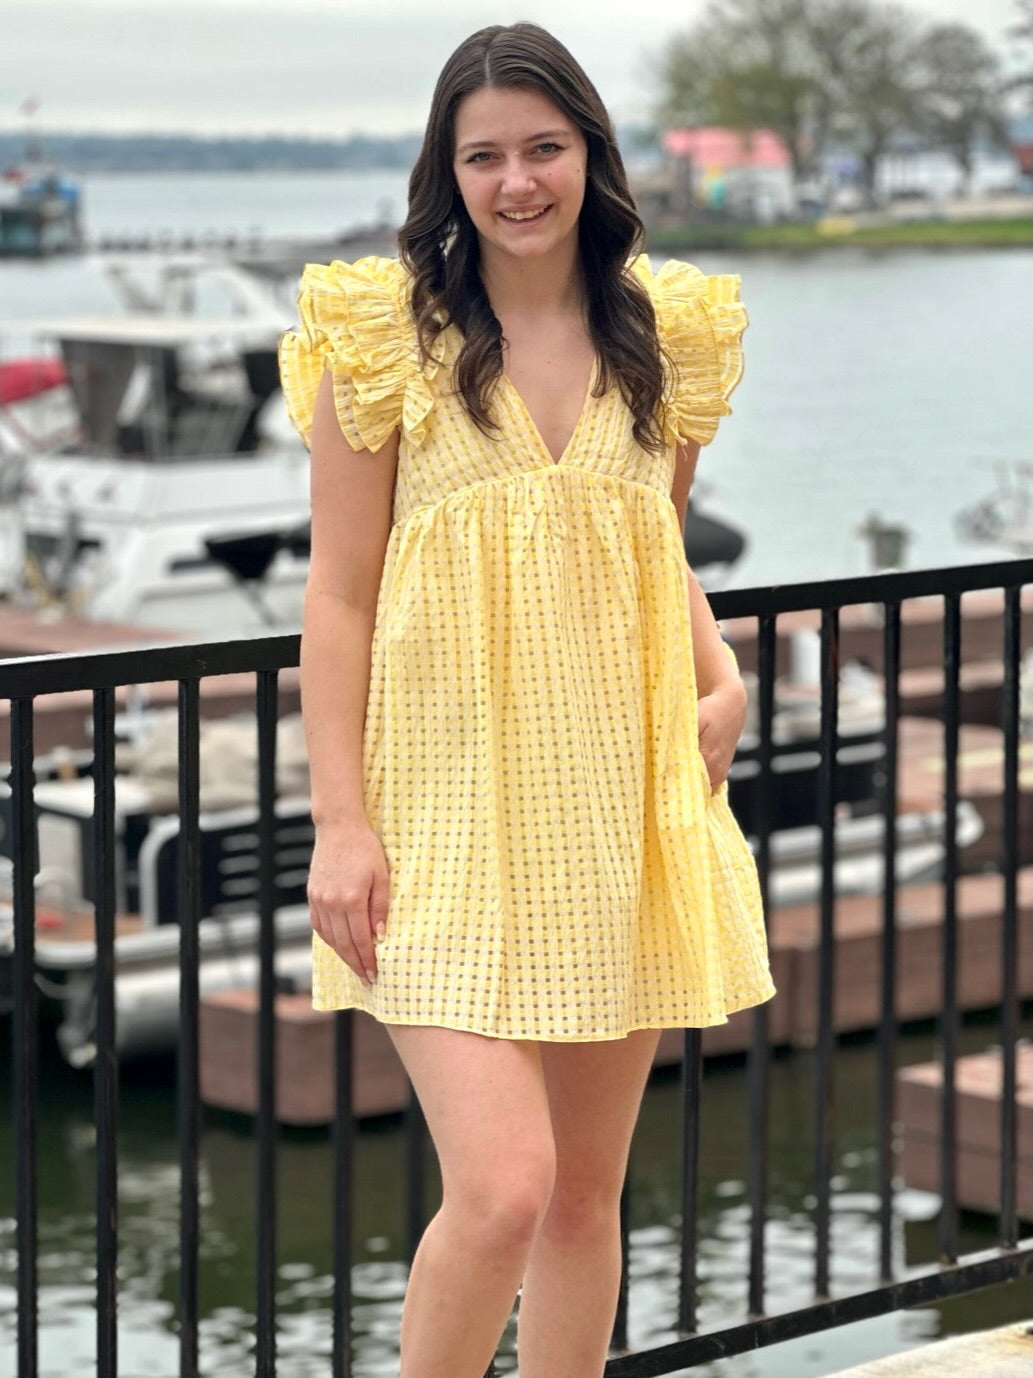 Megan in lemon dress front view smiling